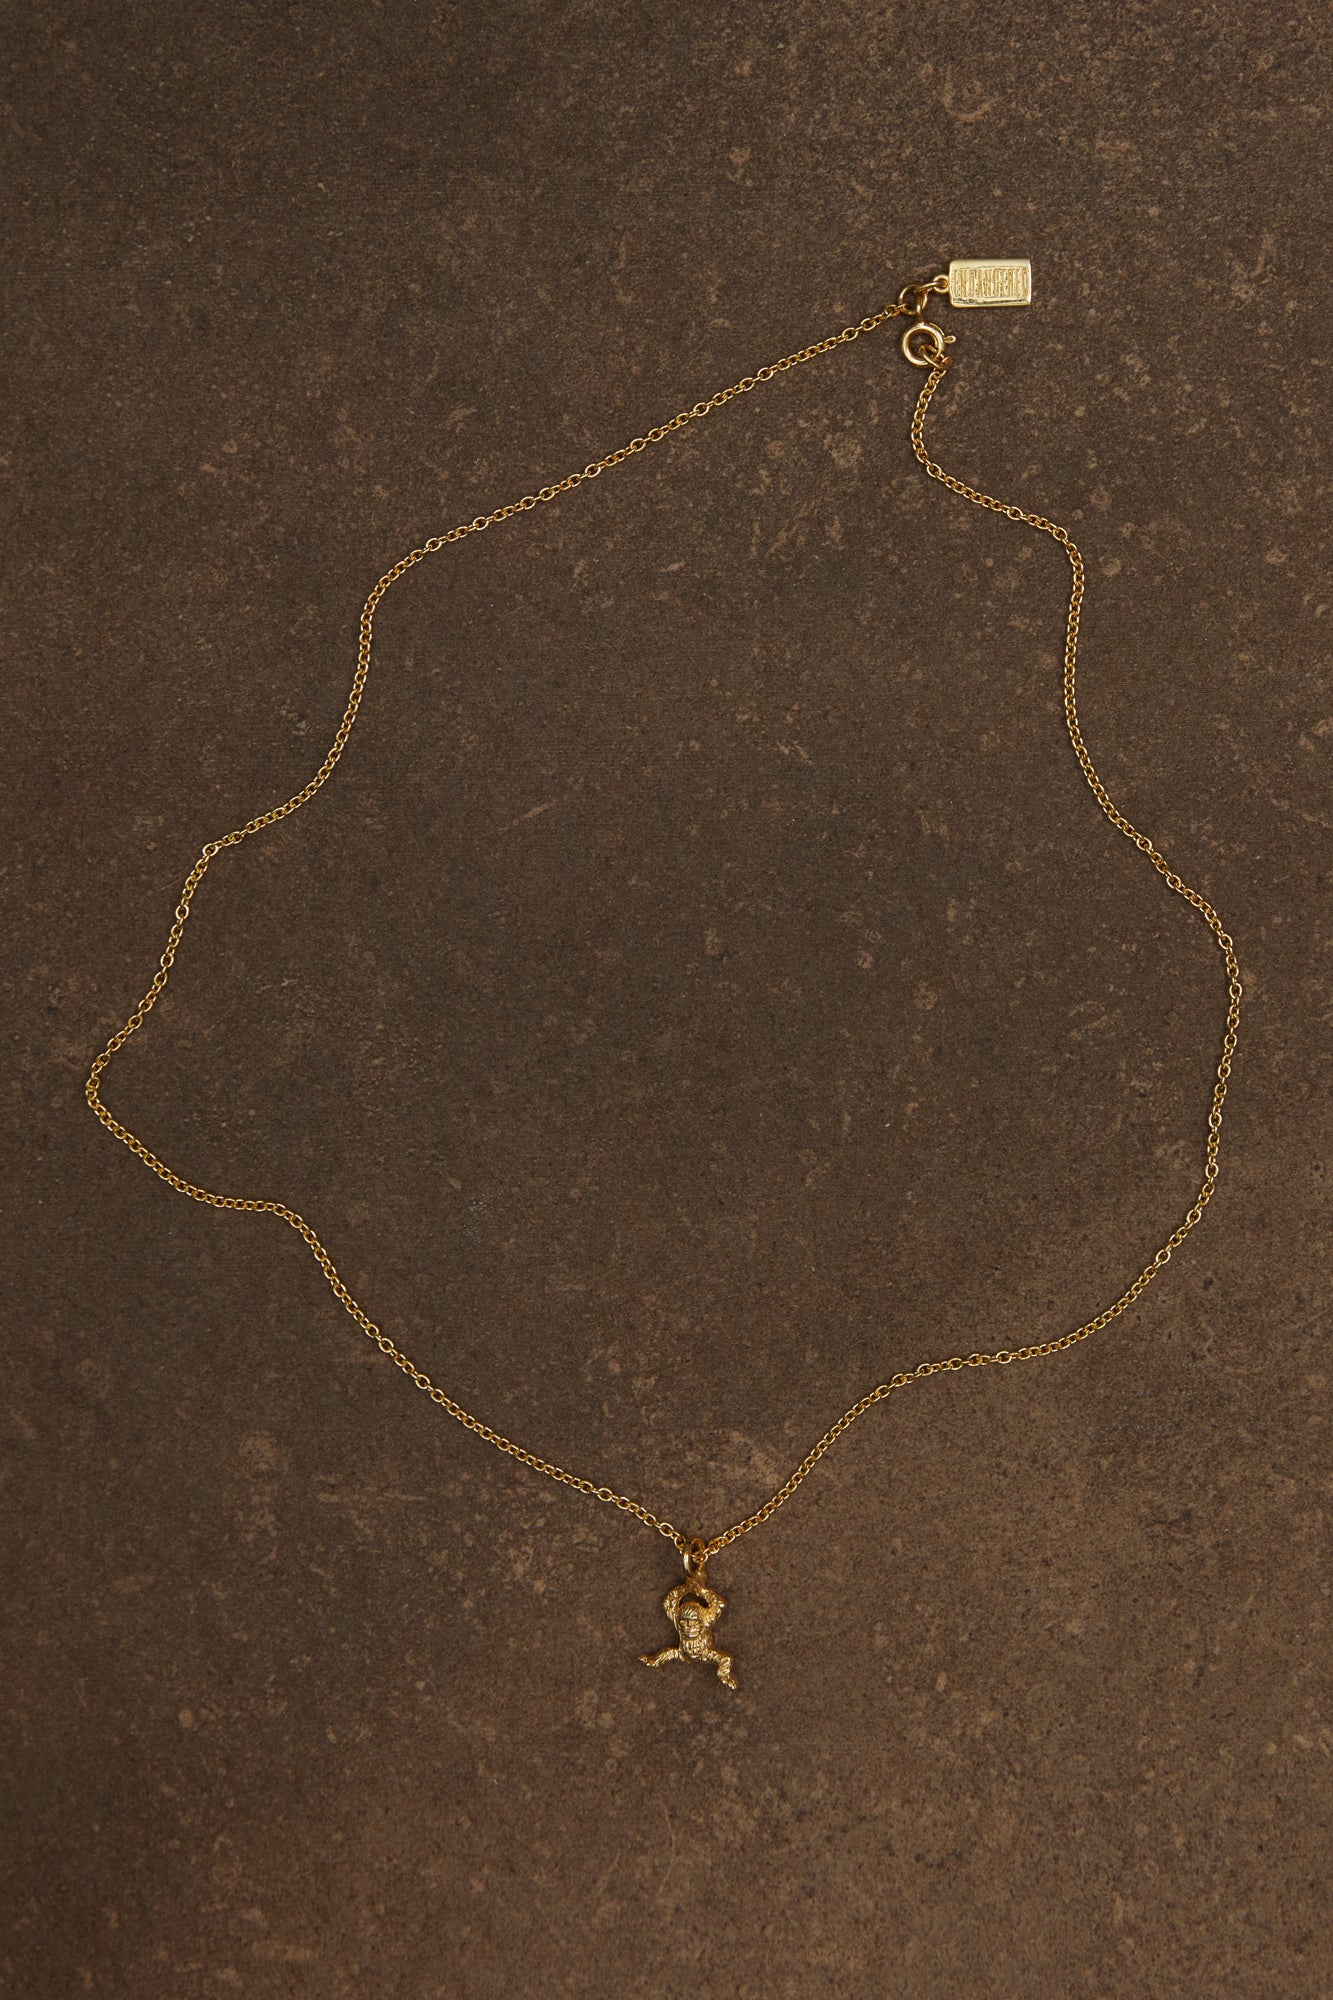 Borneo orangutan necklace